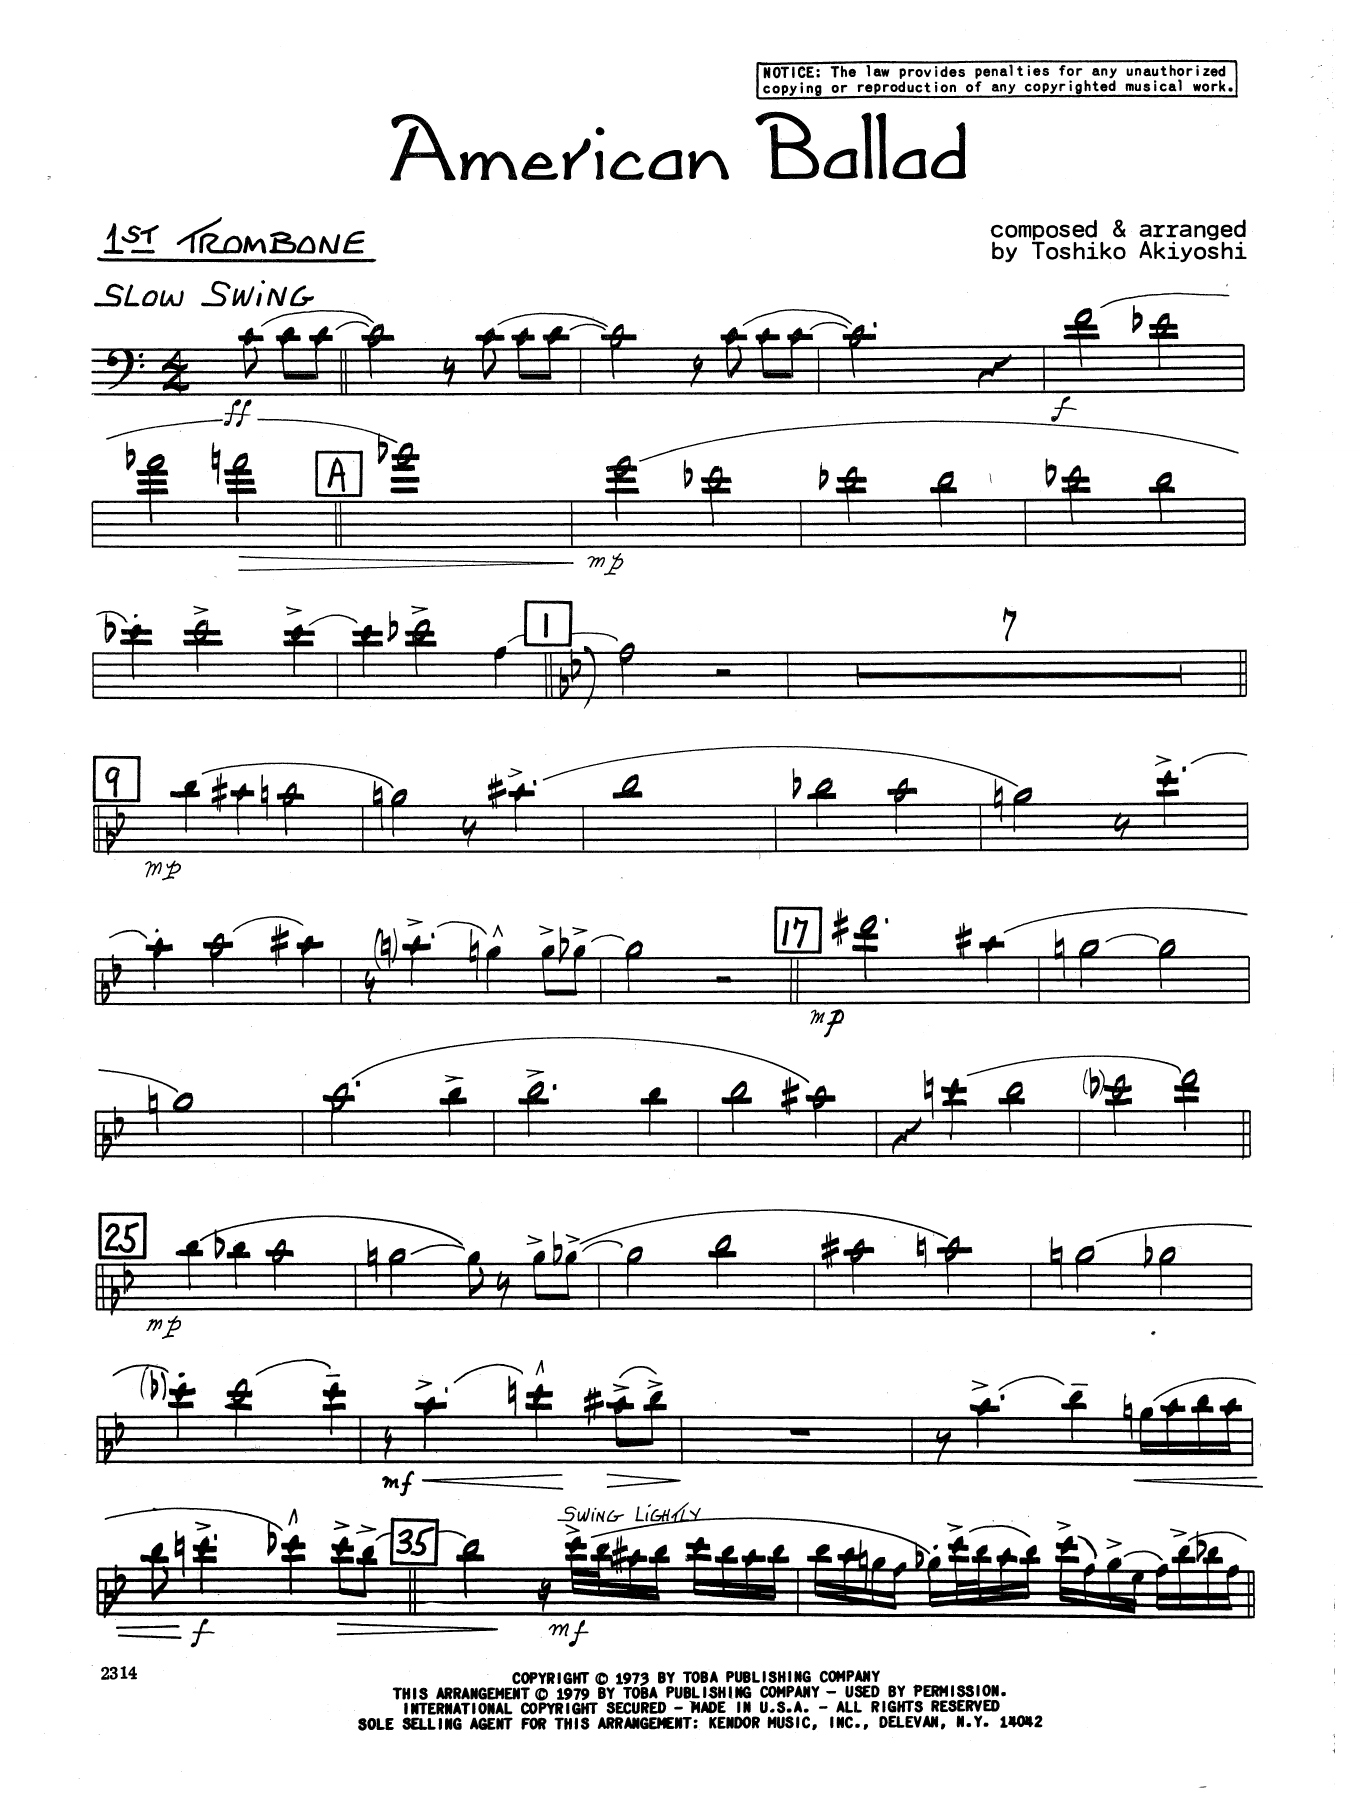 Download Toshiko Akiyoshi American Ballad - 1st Trombone Sheet Music